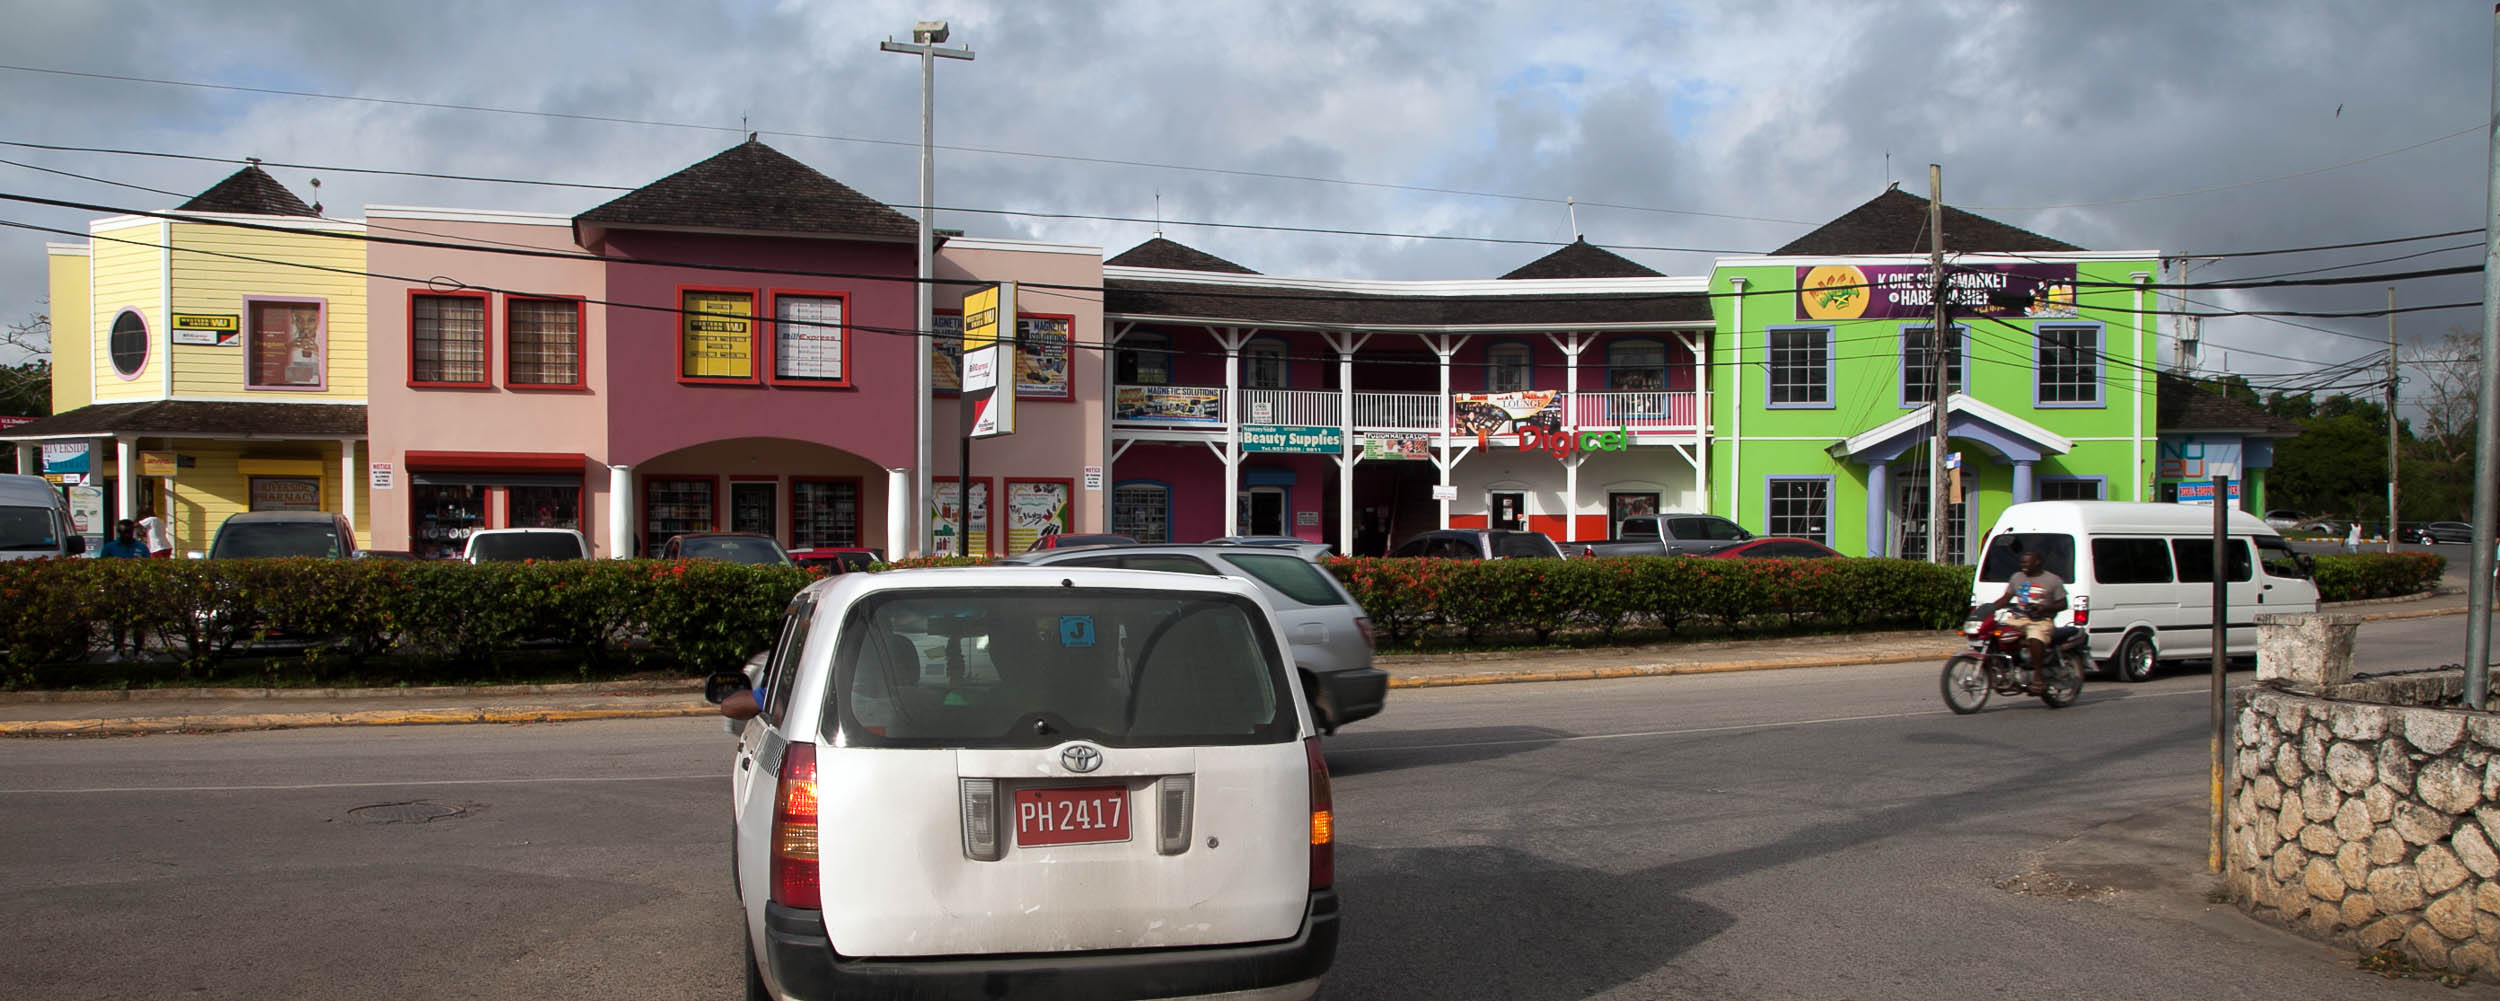 Negril Center Shopping - Negril Jamaica